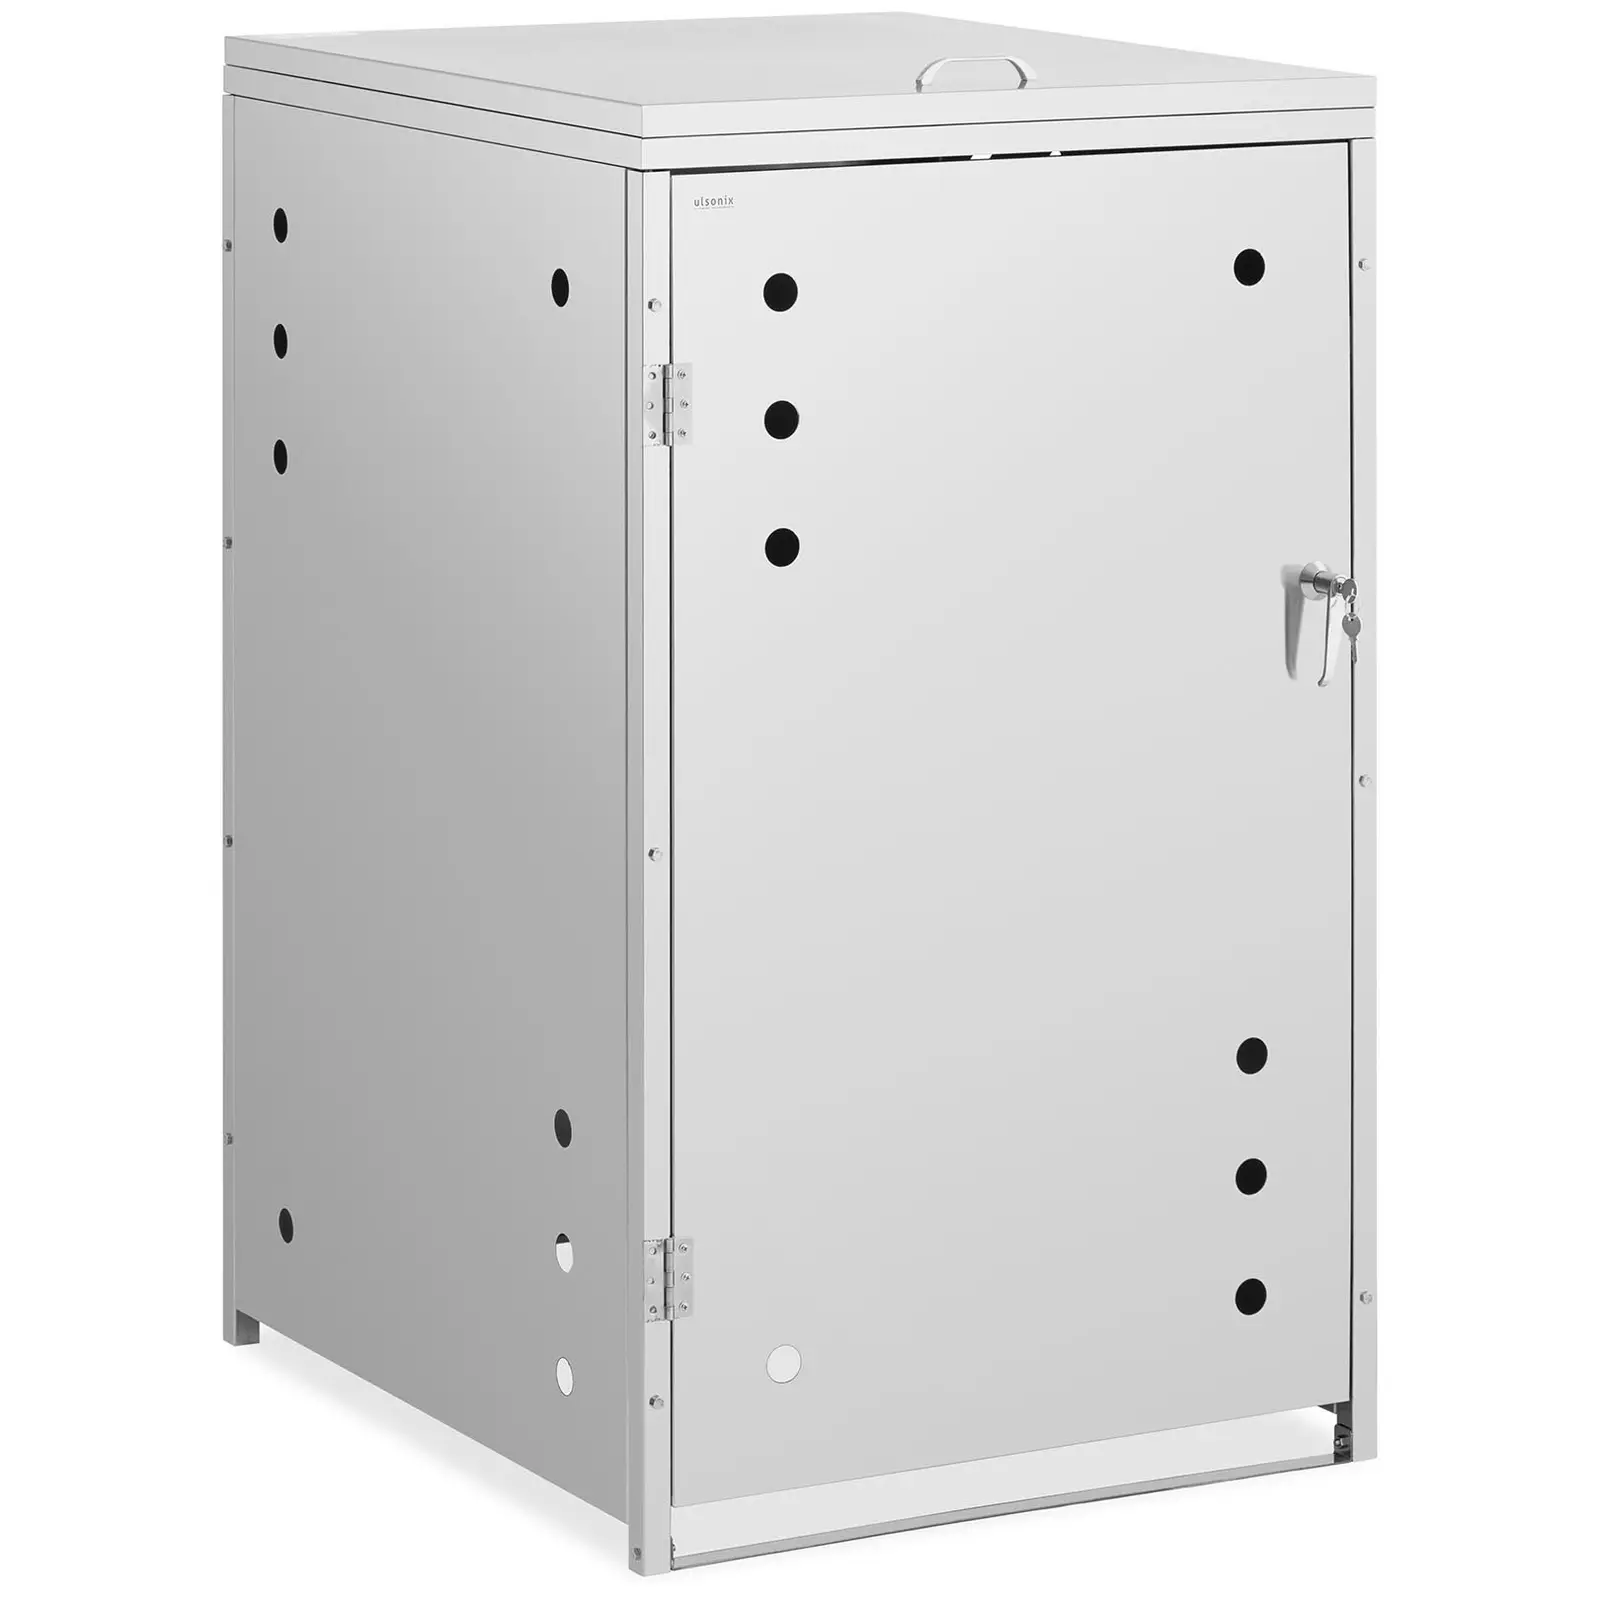 Bin Storage Box -  240 L - horizontal air vents